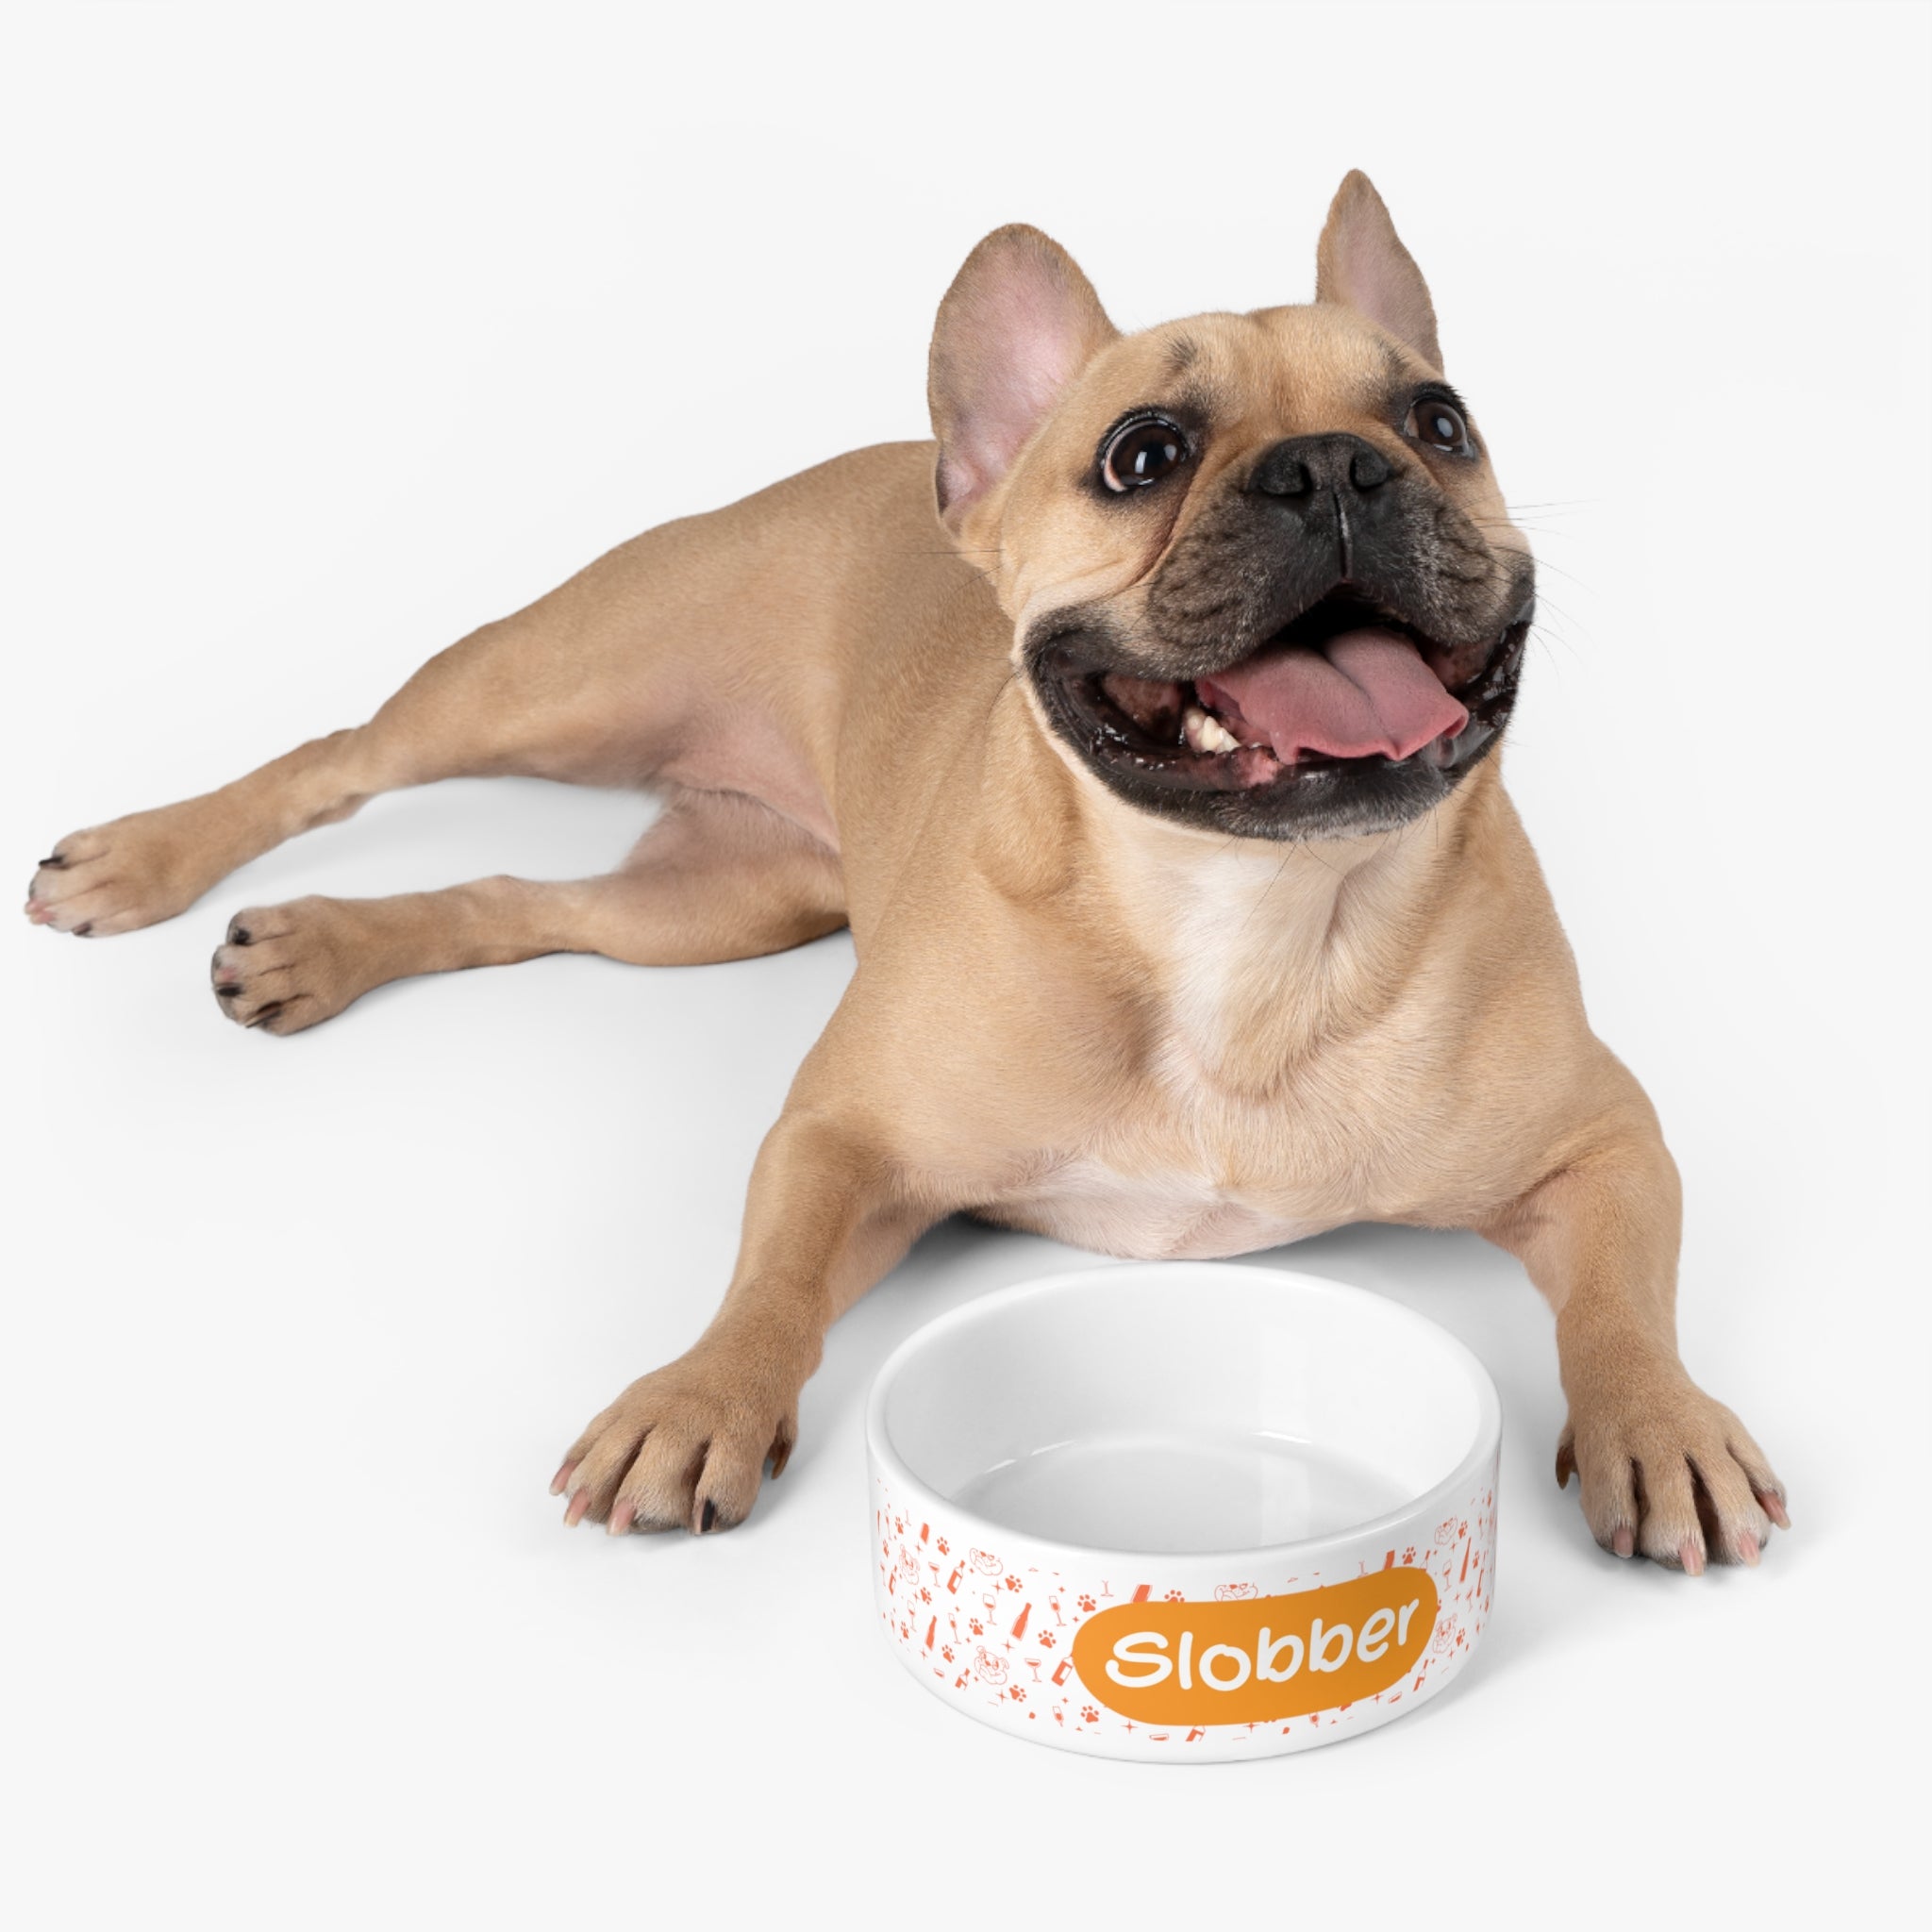 Tipsy Bully "Slobber" Dog Food Bowl (Orange)